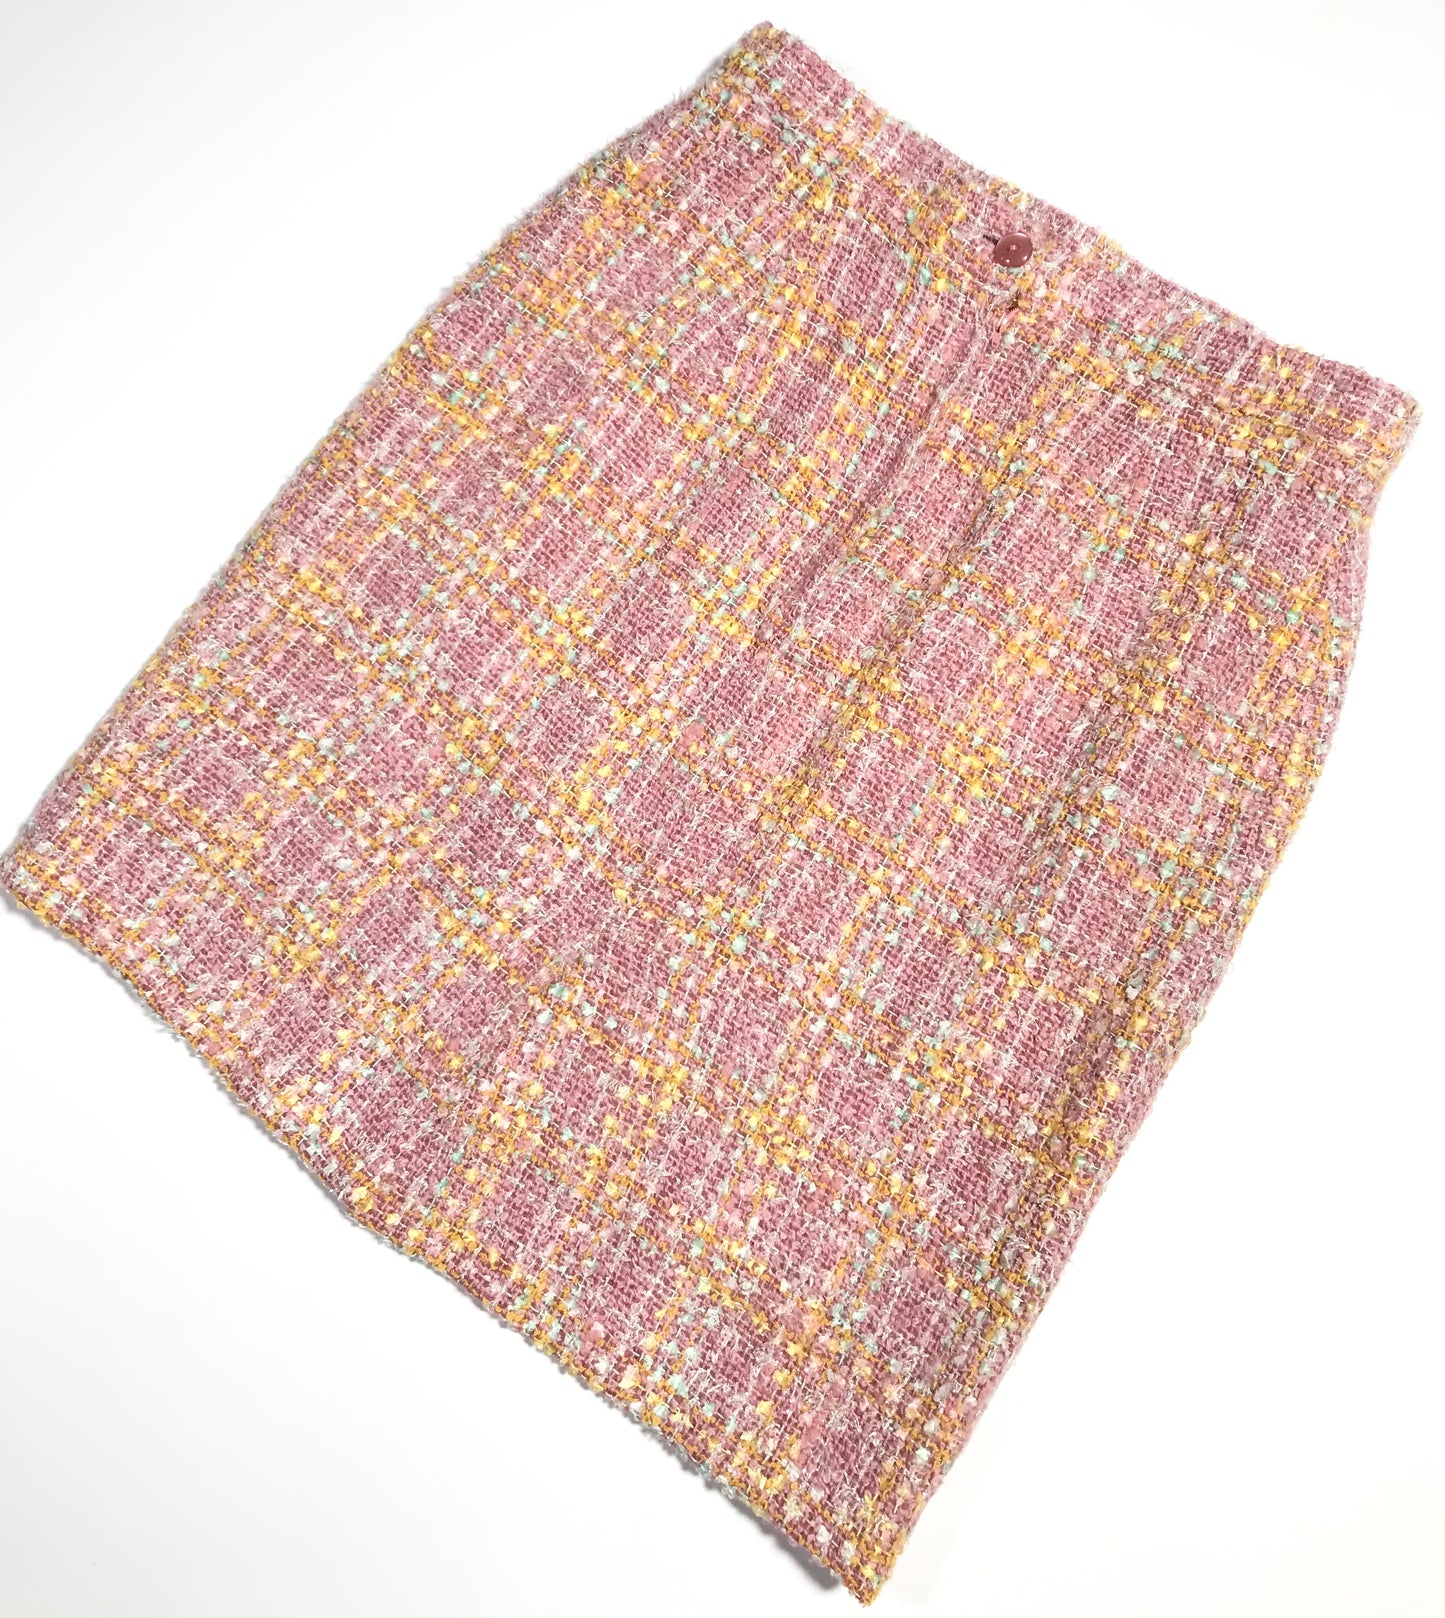 Ungaro skirt in pink tweed